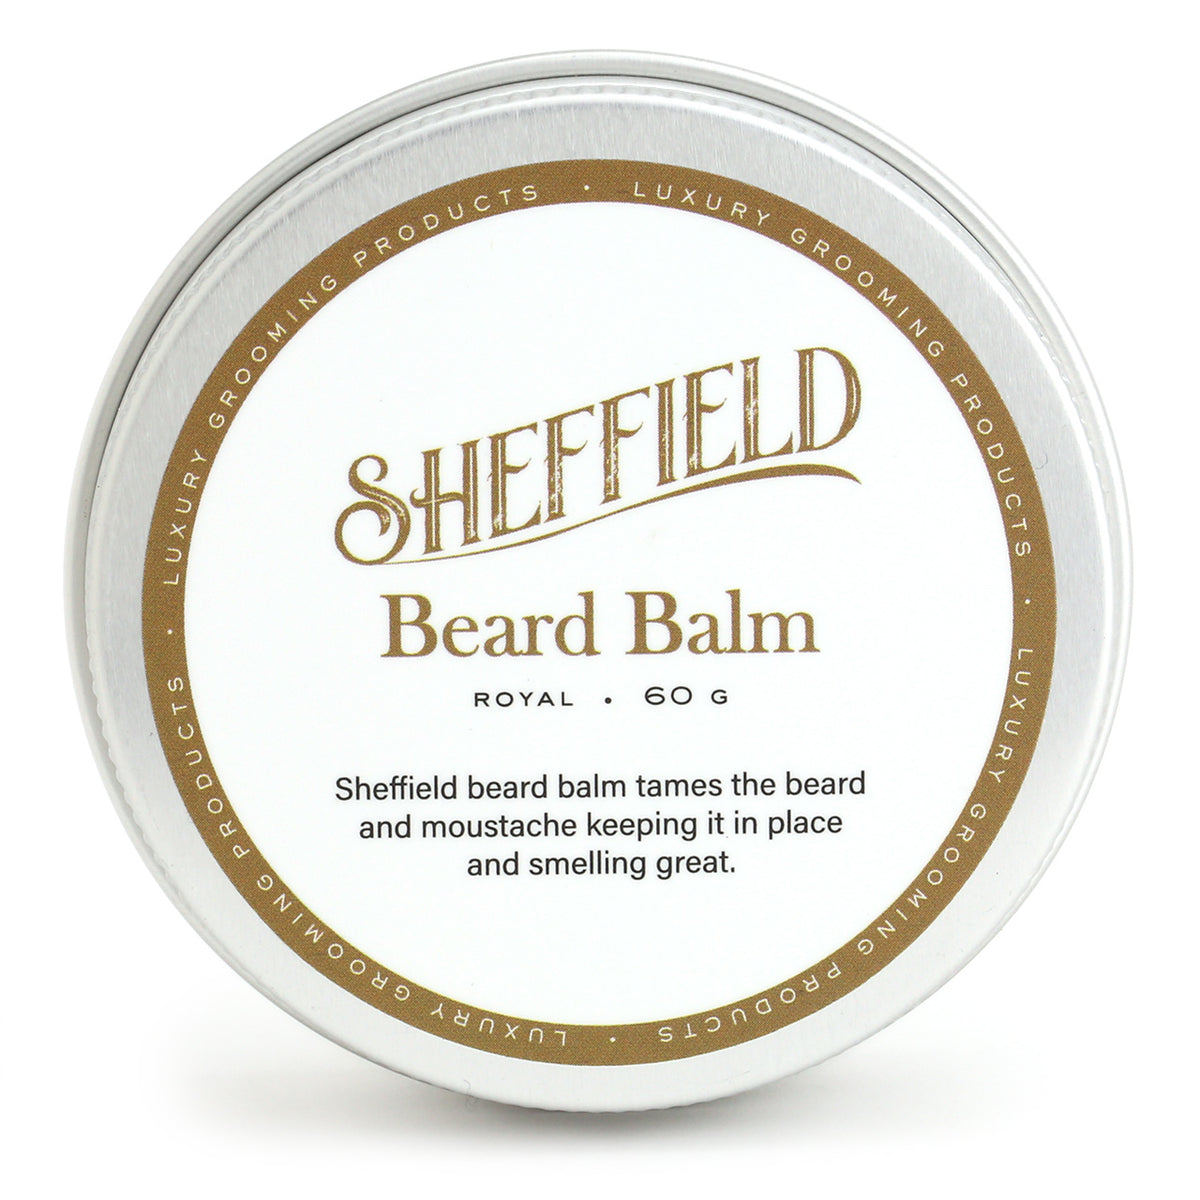 Sheffield Beard Balm 60g, Royal. Top view of tin